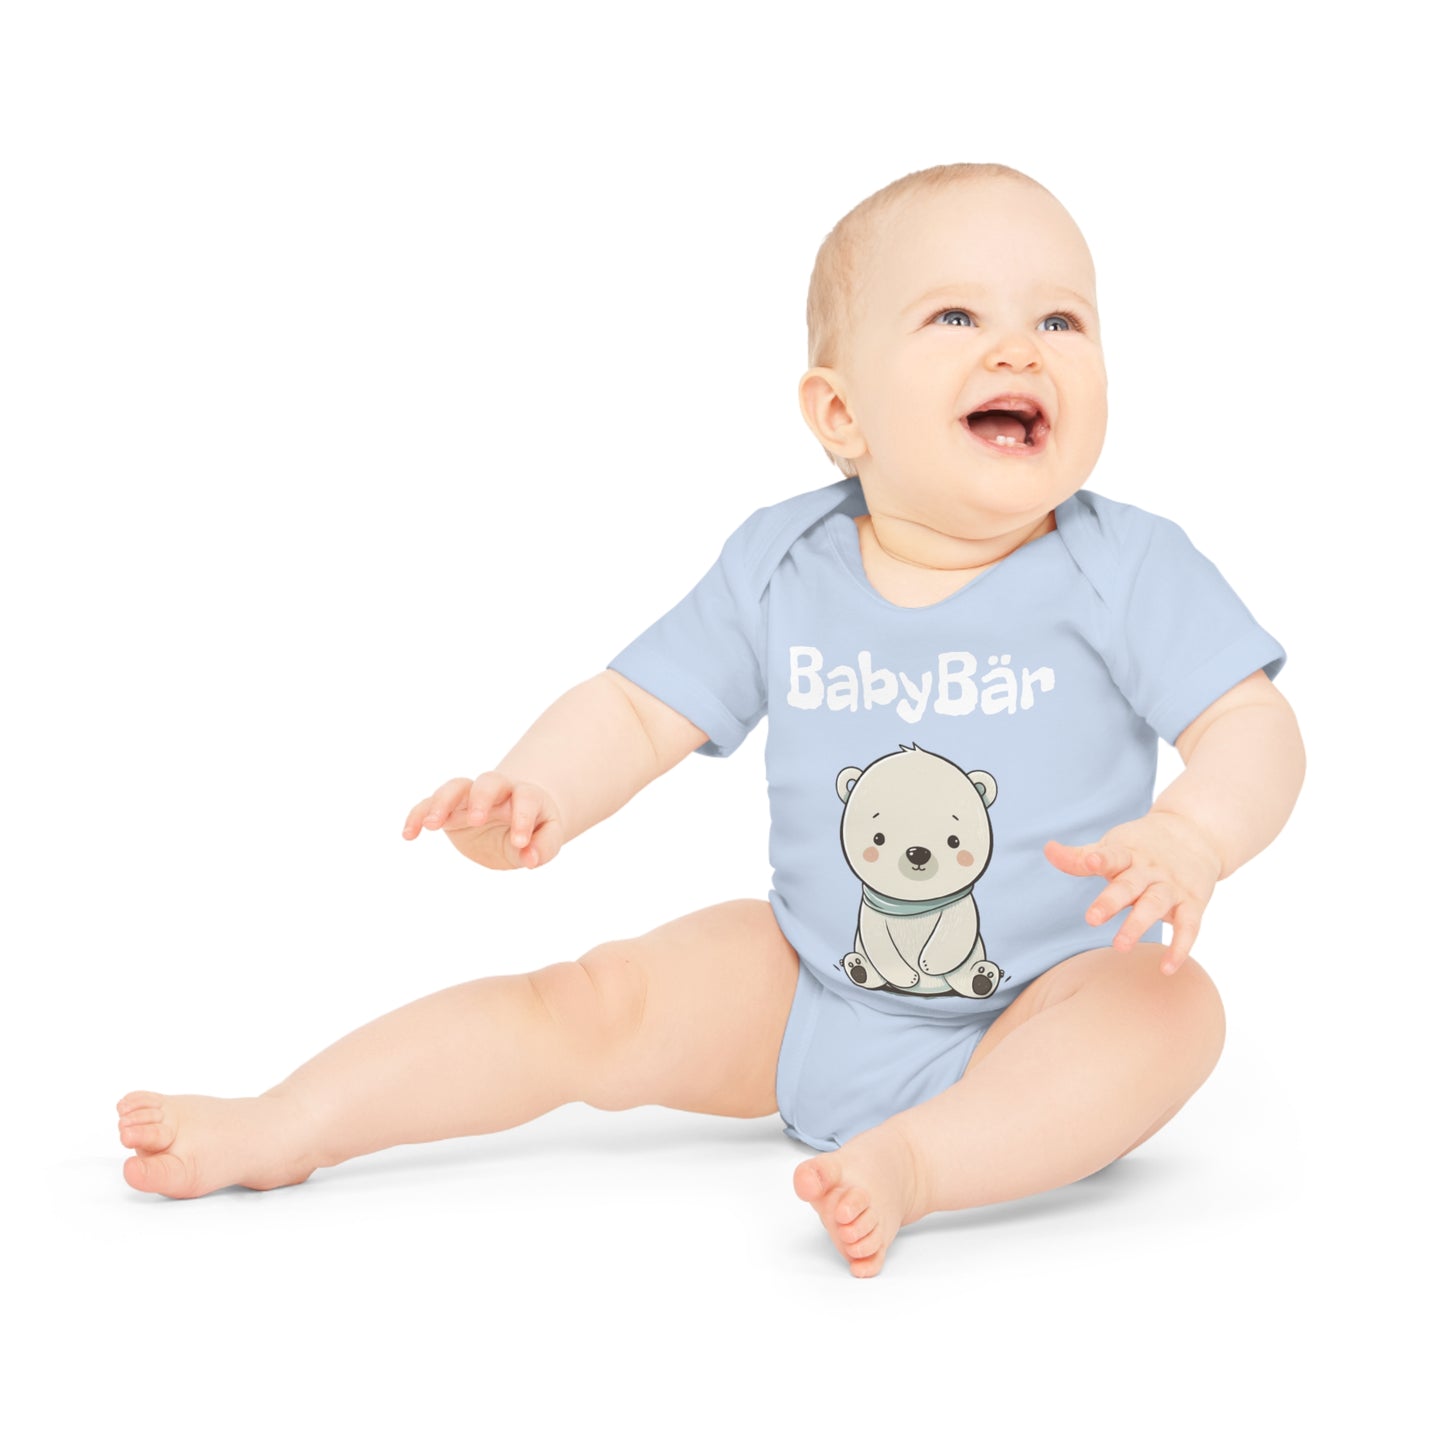 Supersüßer Babybody | Onsies | "Babybär" | Babygeschenk | Geburt